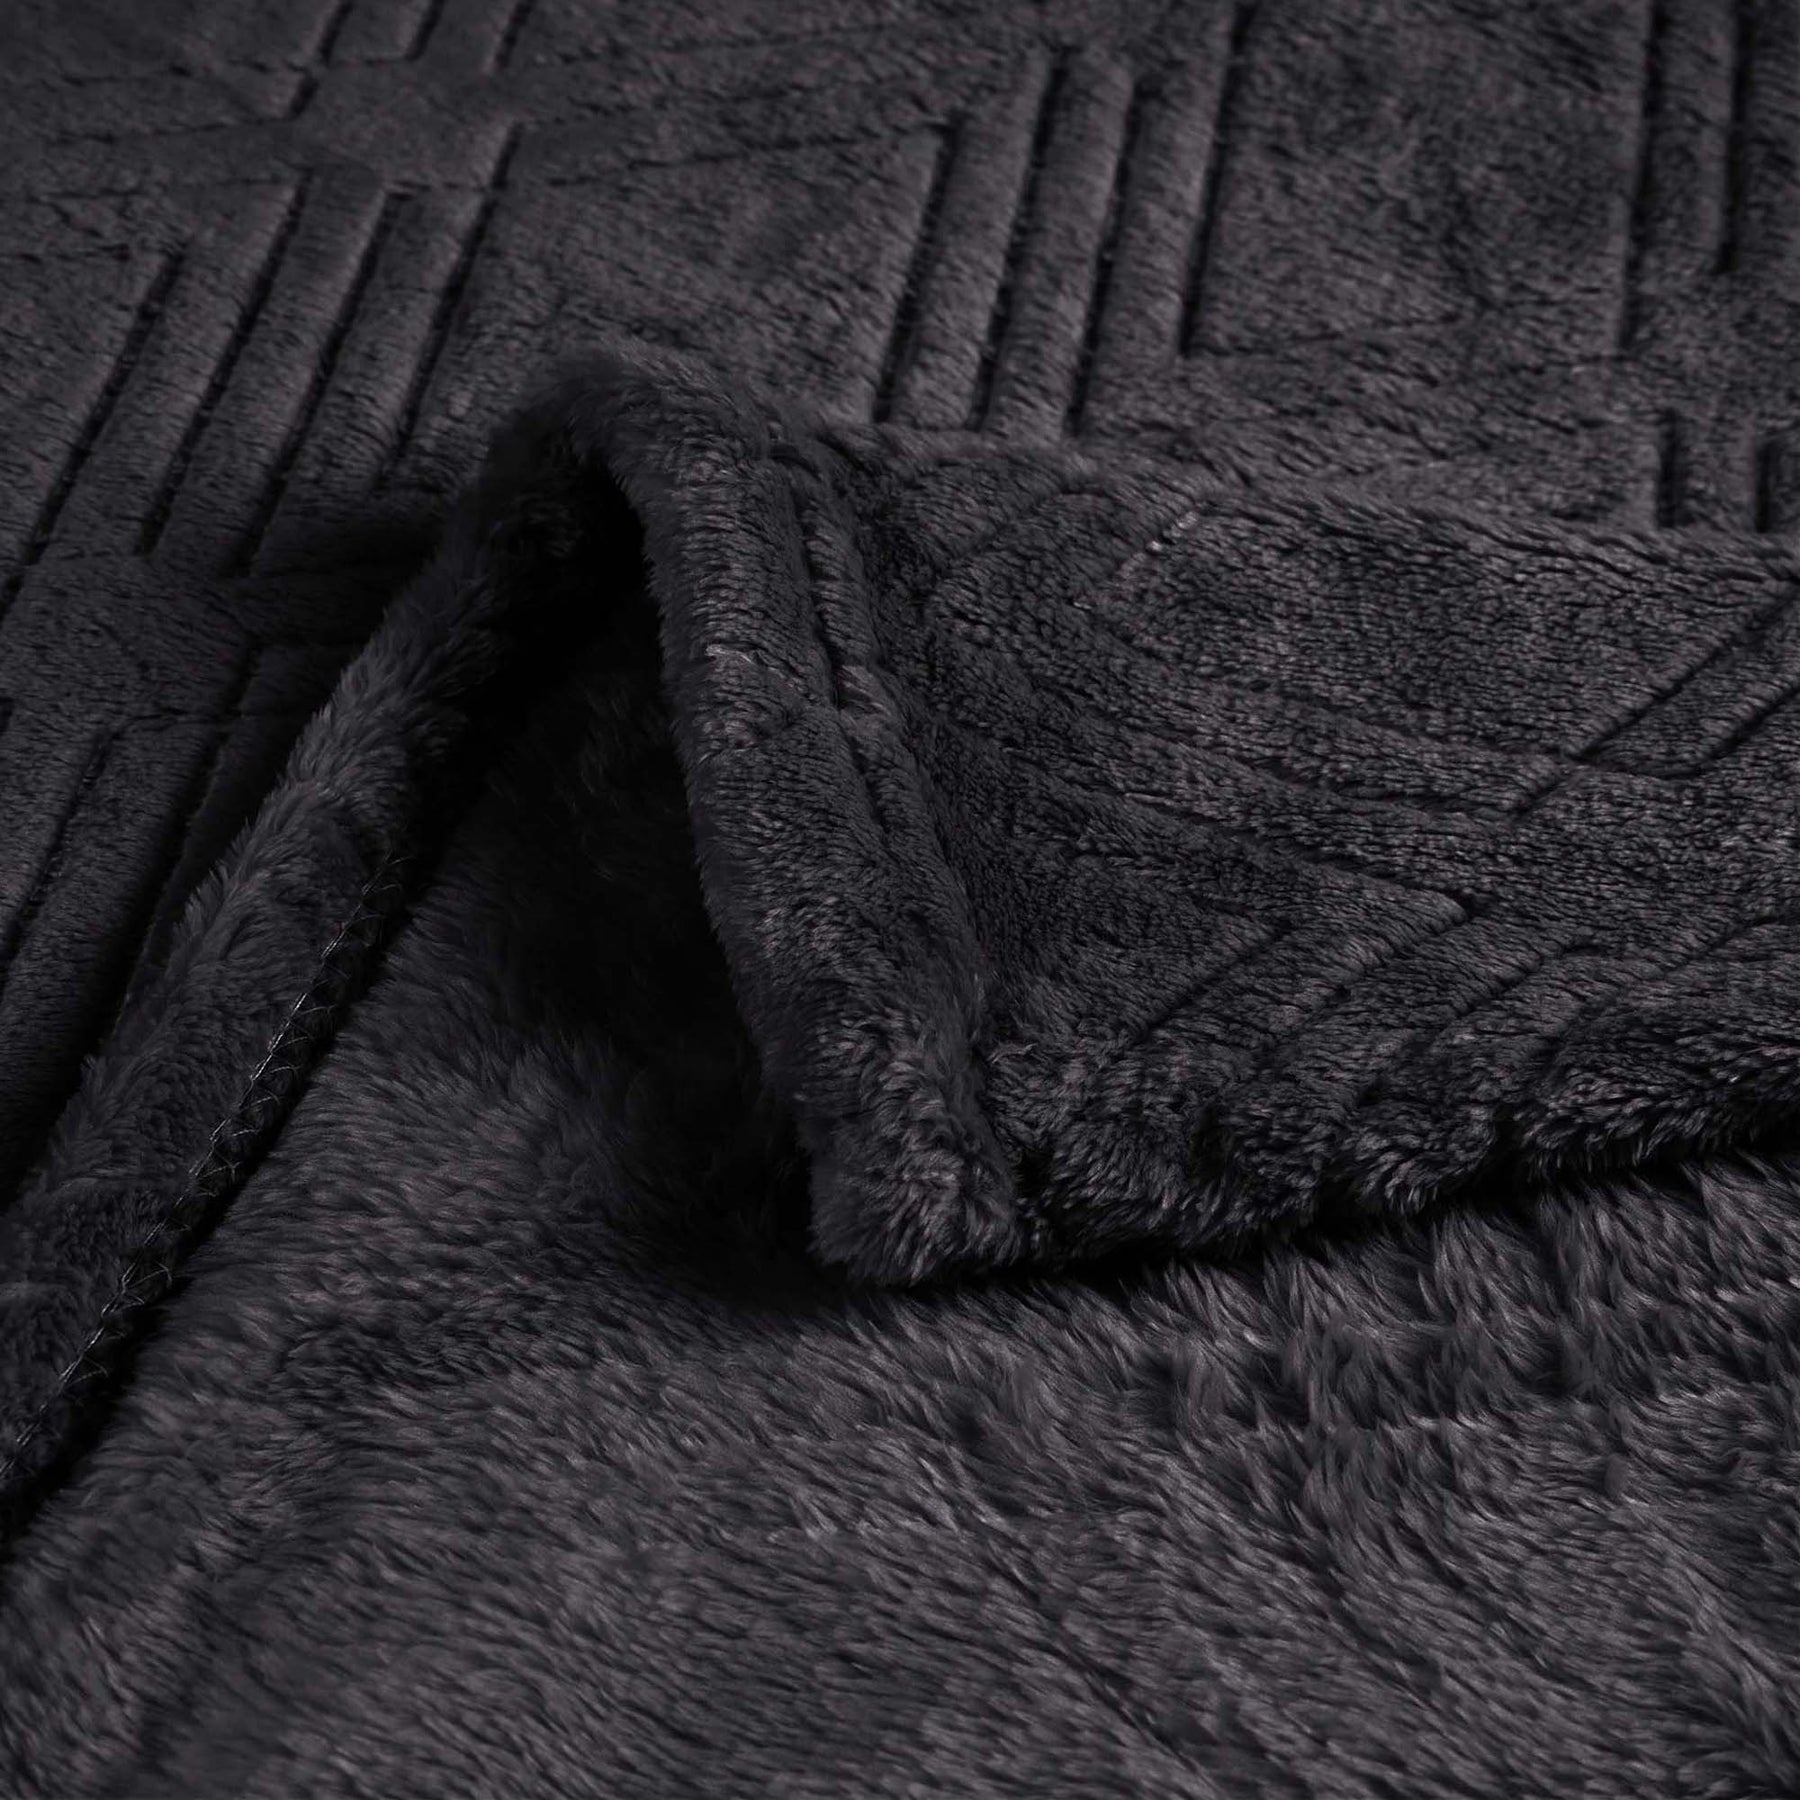 Superior Alaska Diamond Flannel Fleece Plush Ultra-Soft Blanket - Black